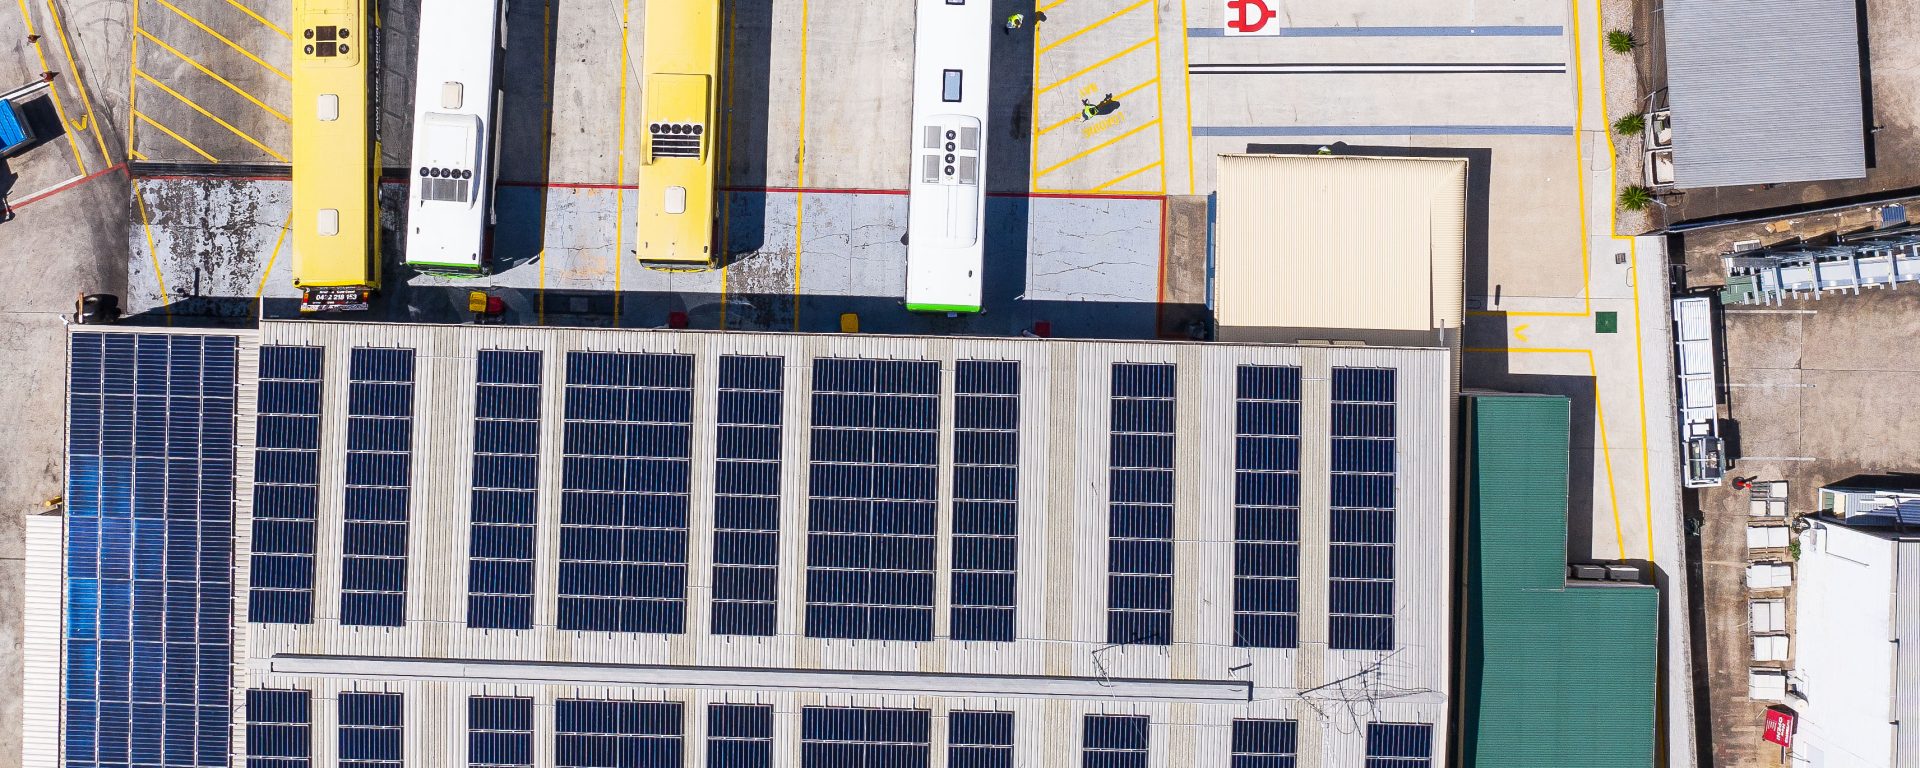 Image of solar panels at Transdev Queensland depot